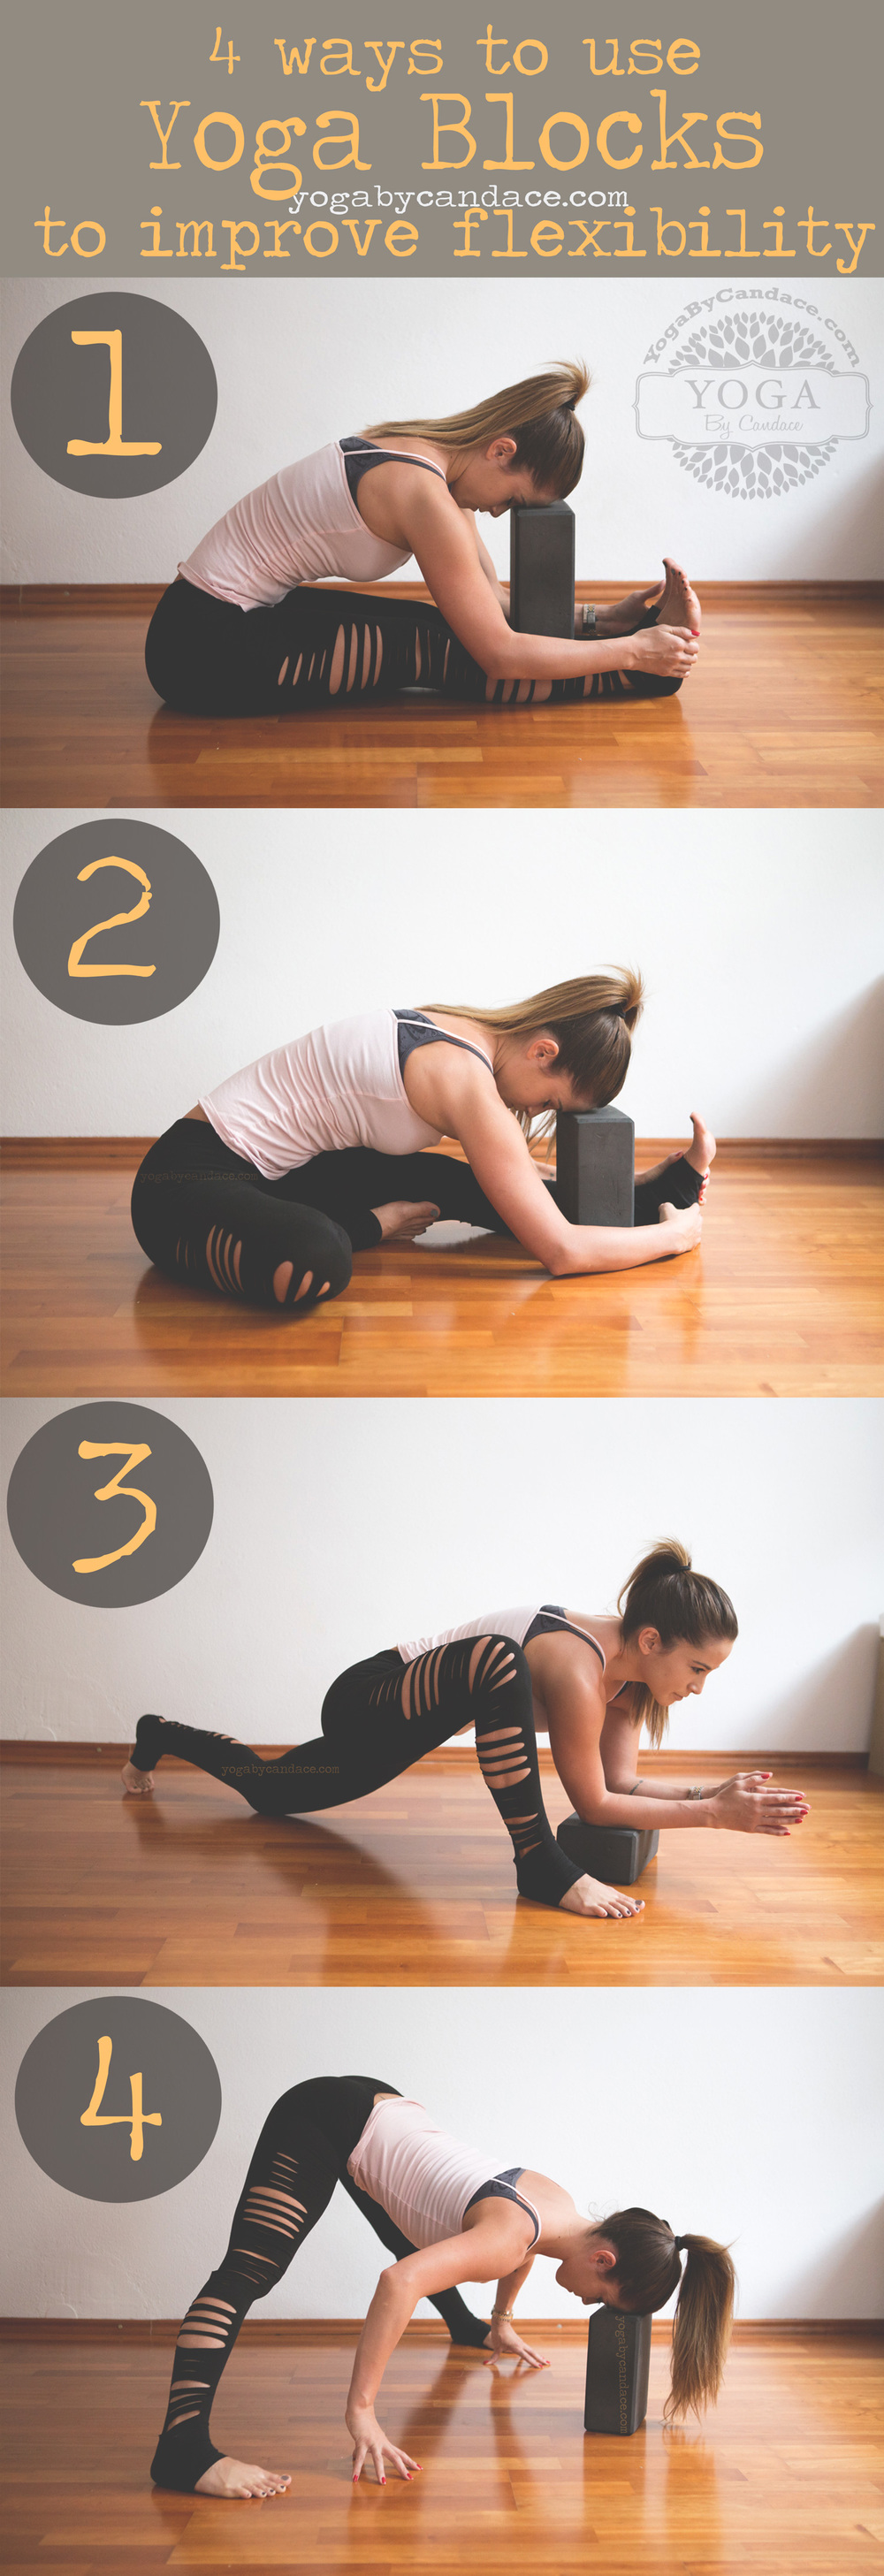 4 Ways to Use Yoga Blocks to Improve Flexibility